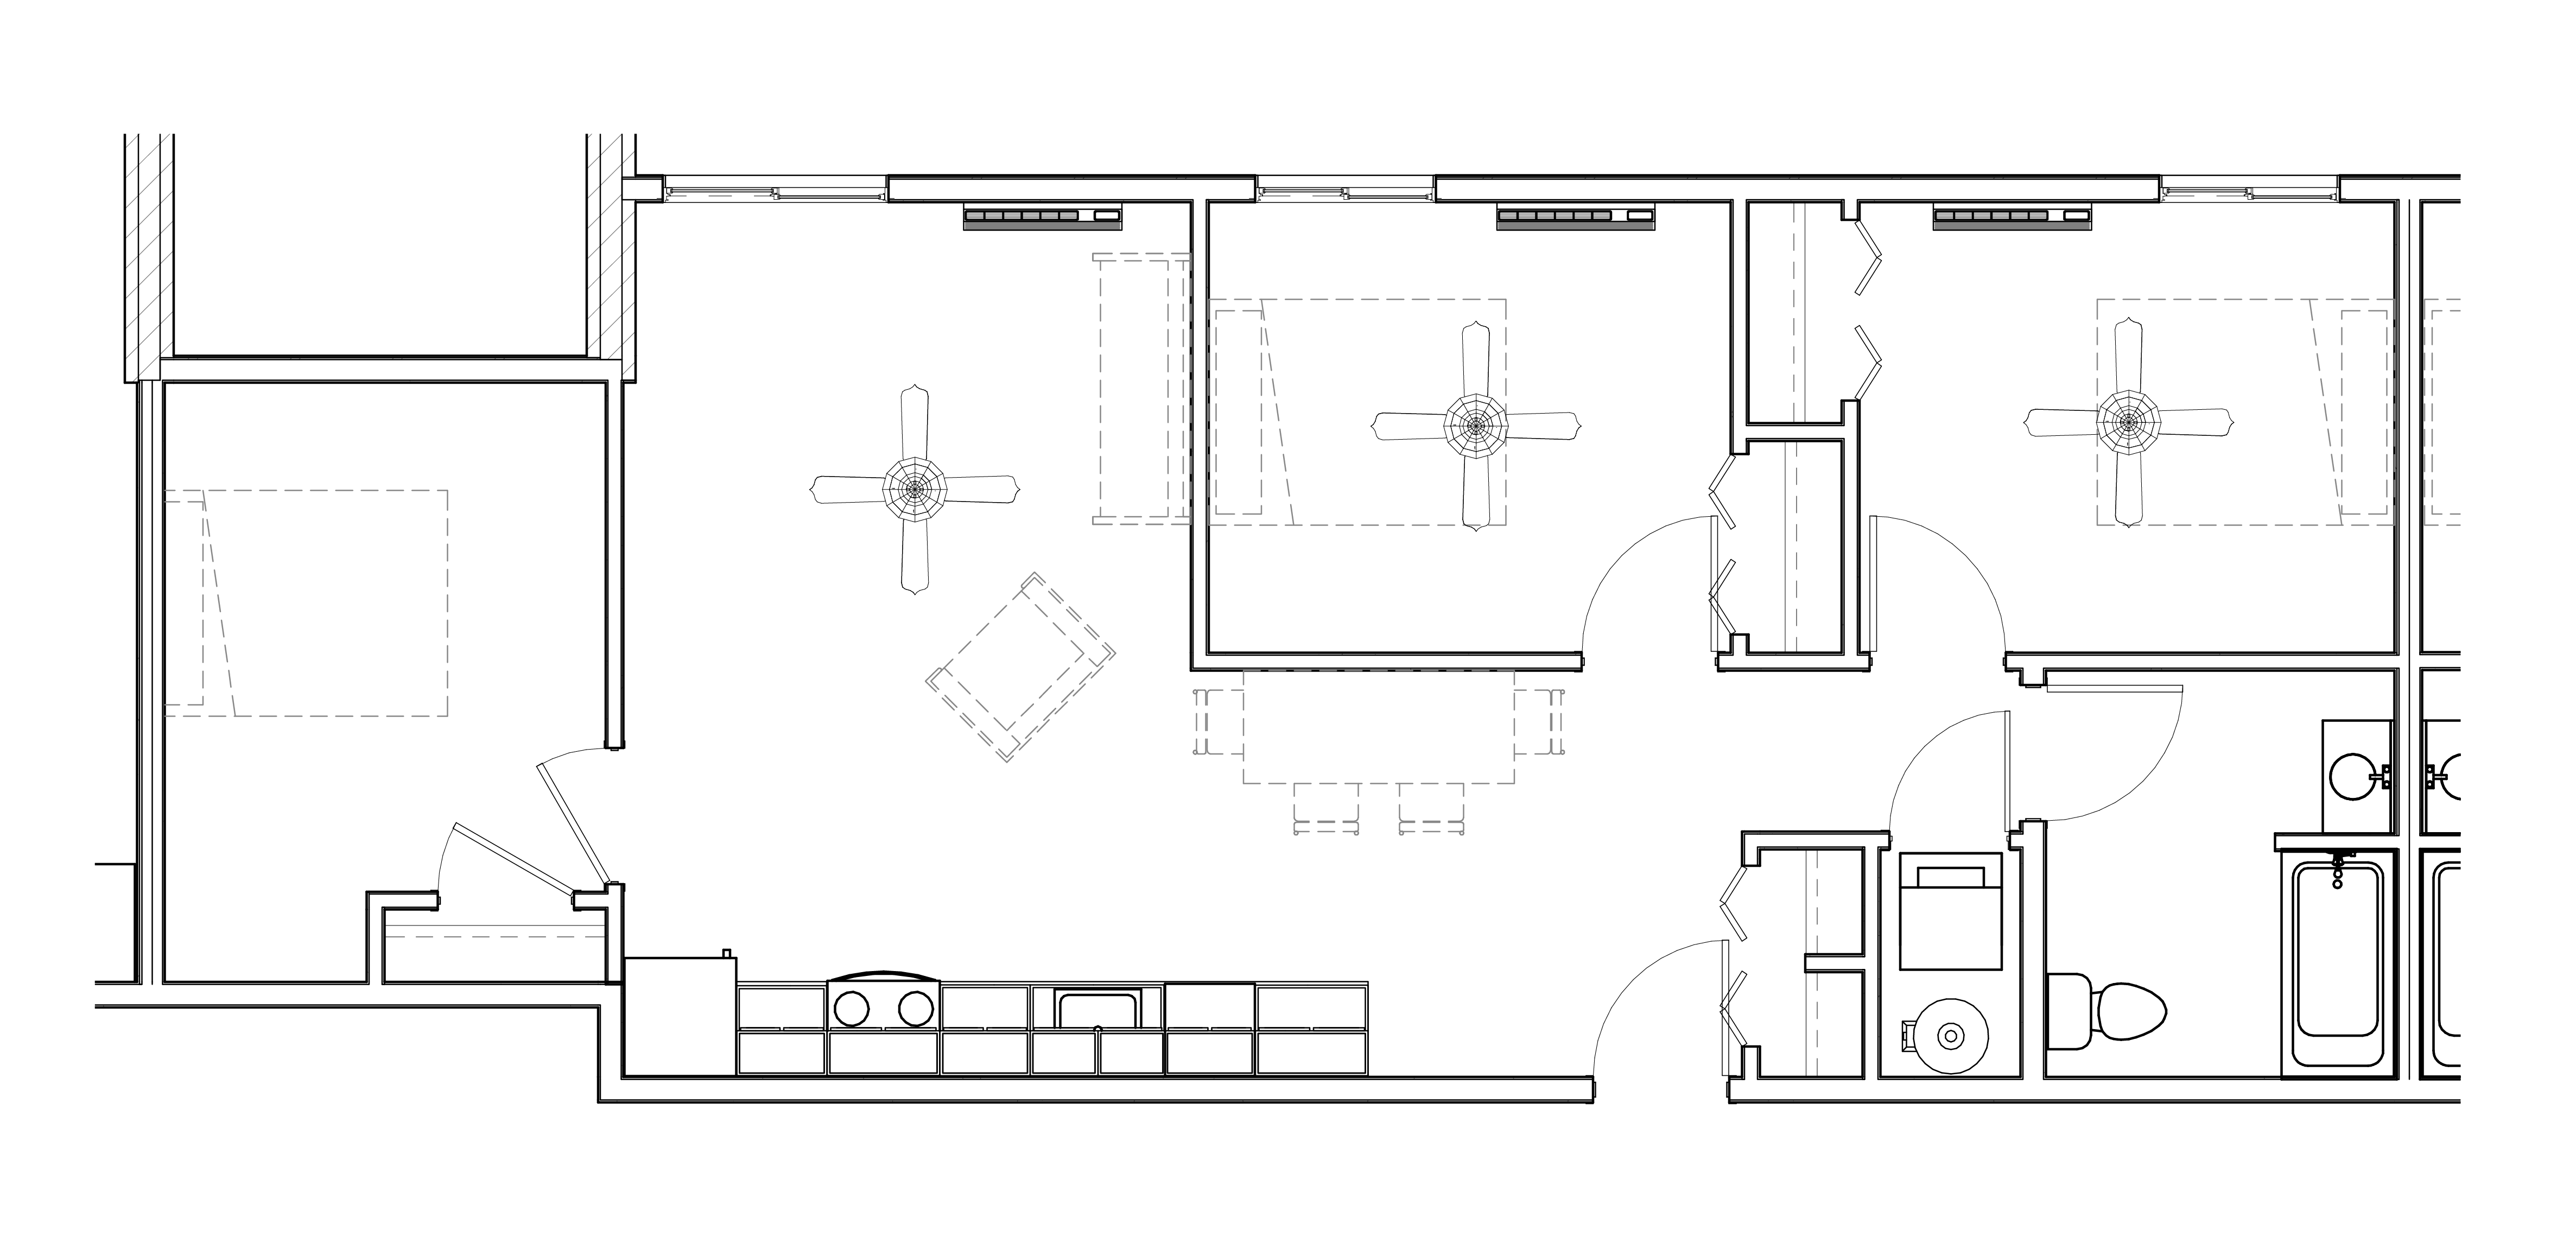 Floorplan A, Three Bedroom layout